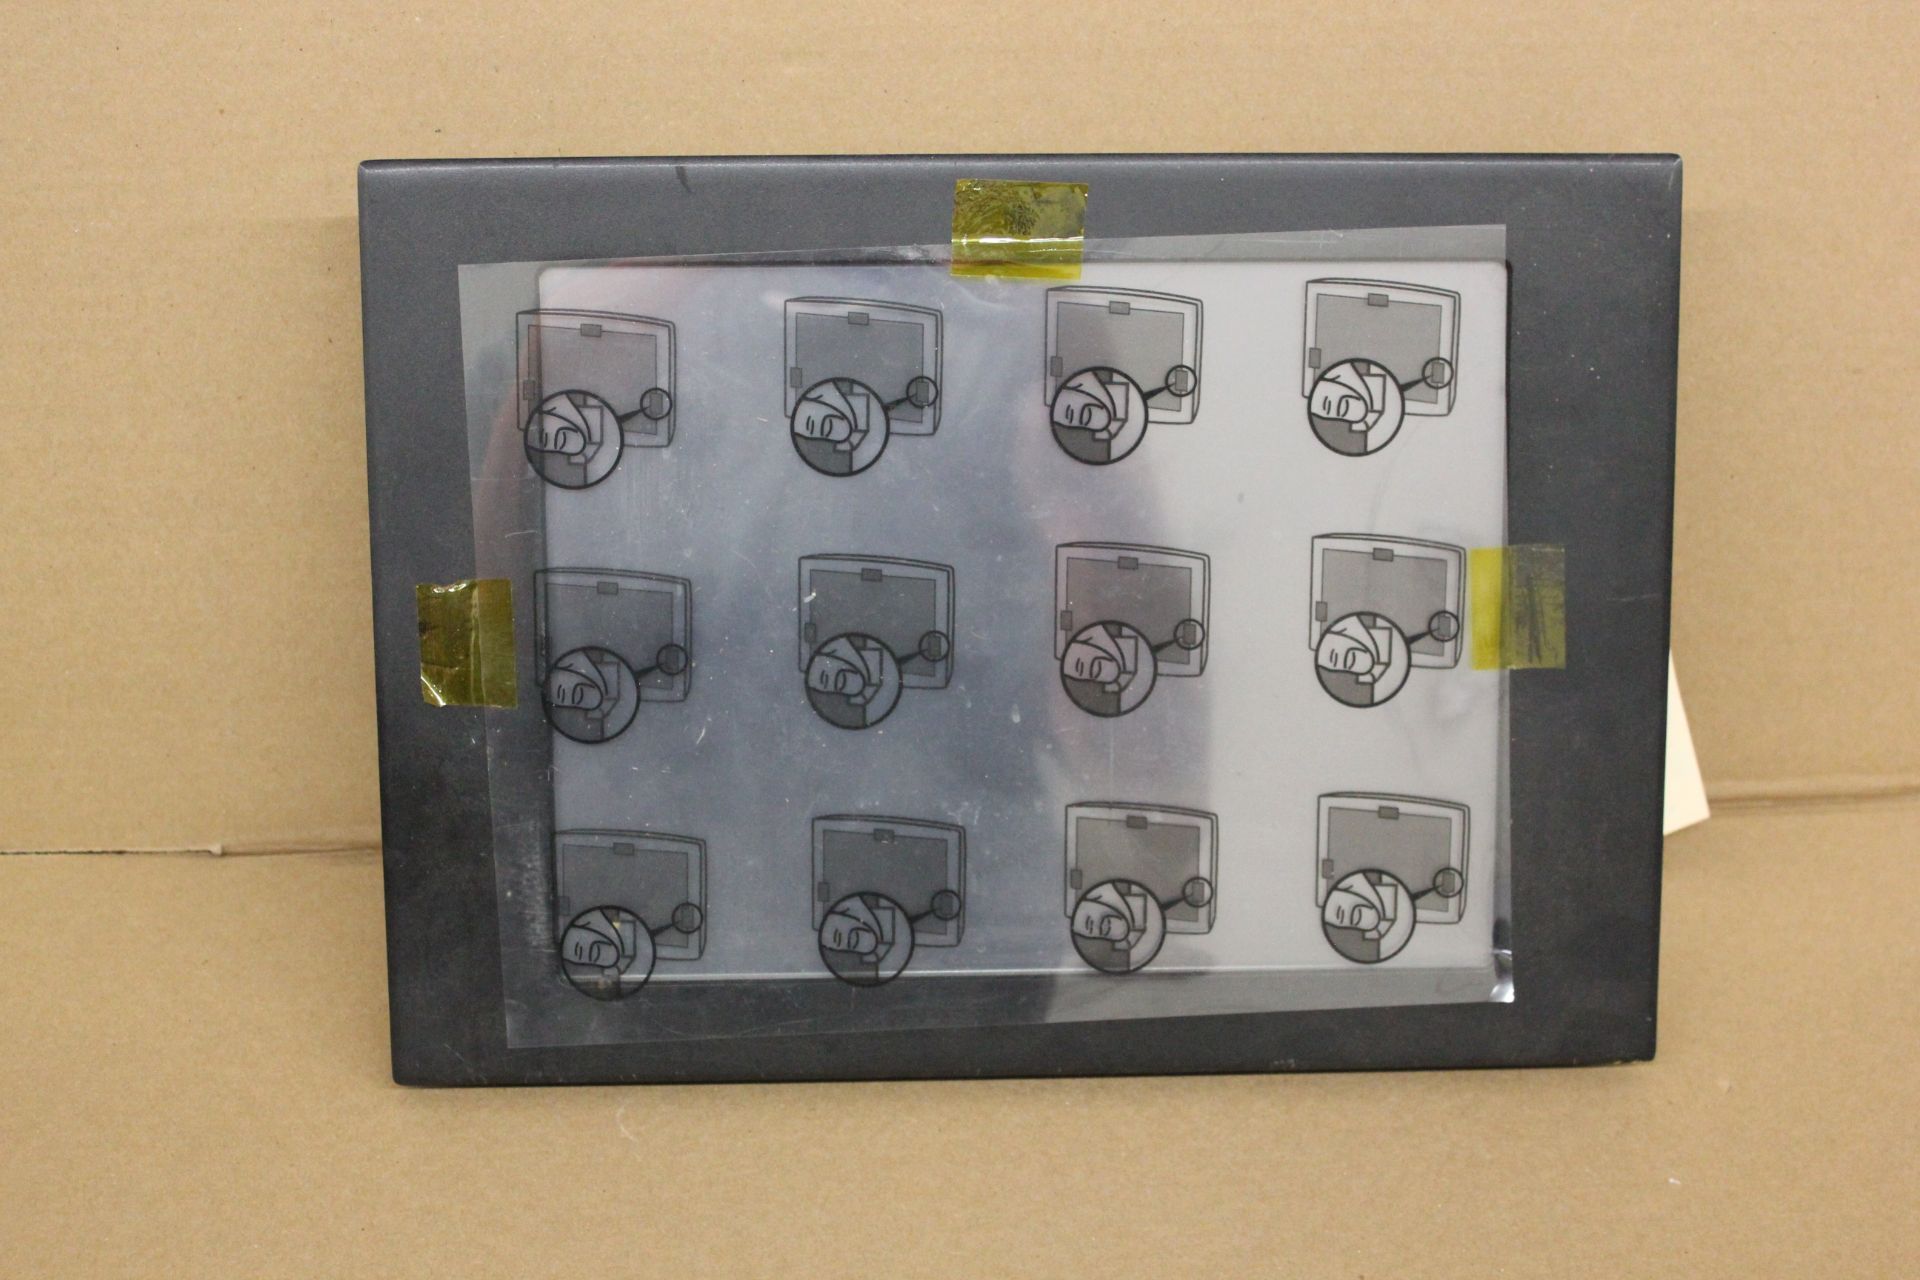 ARISTA LCD TOUCHSCREEN MONITOR PANEL